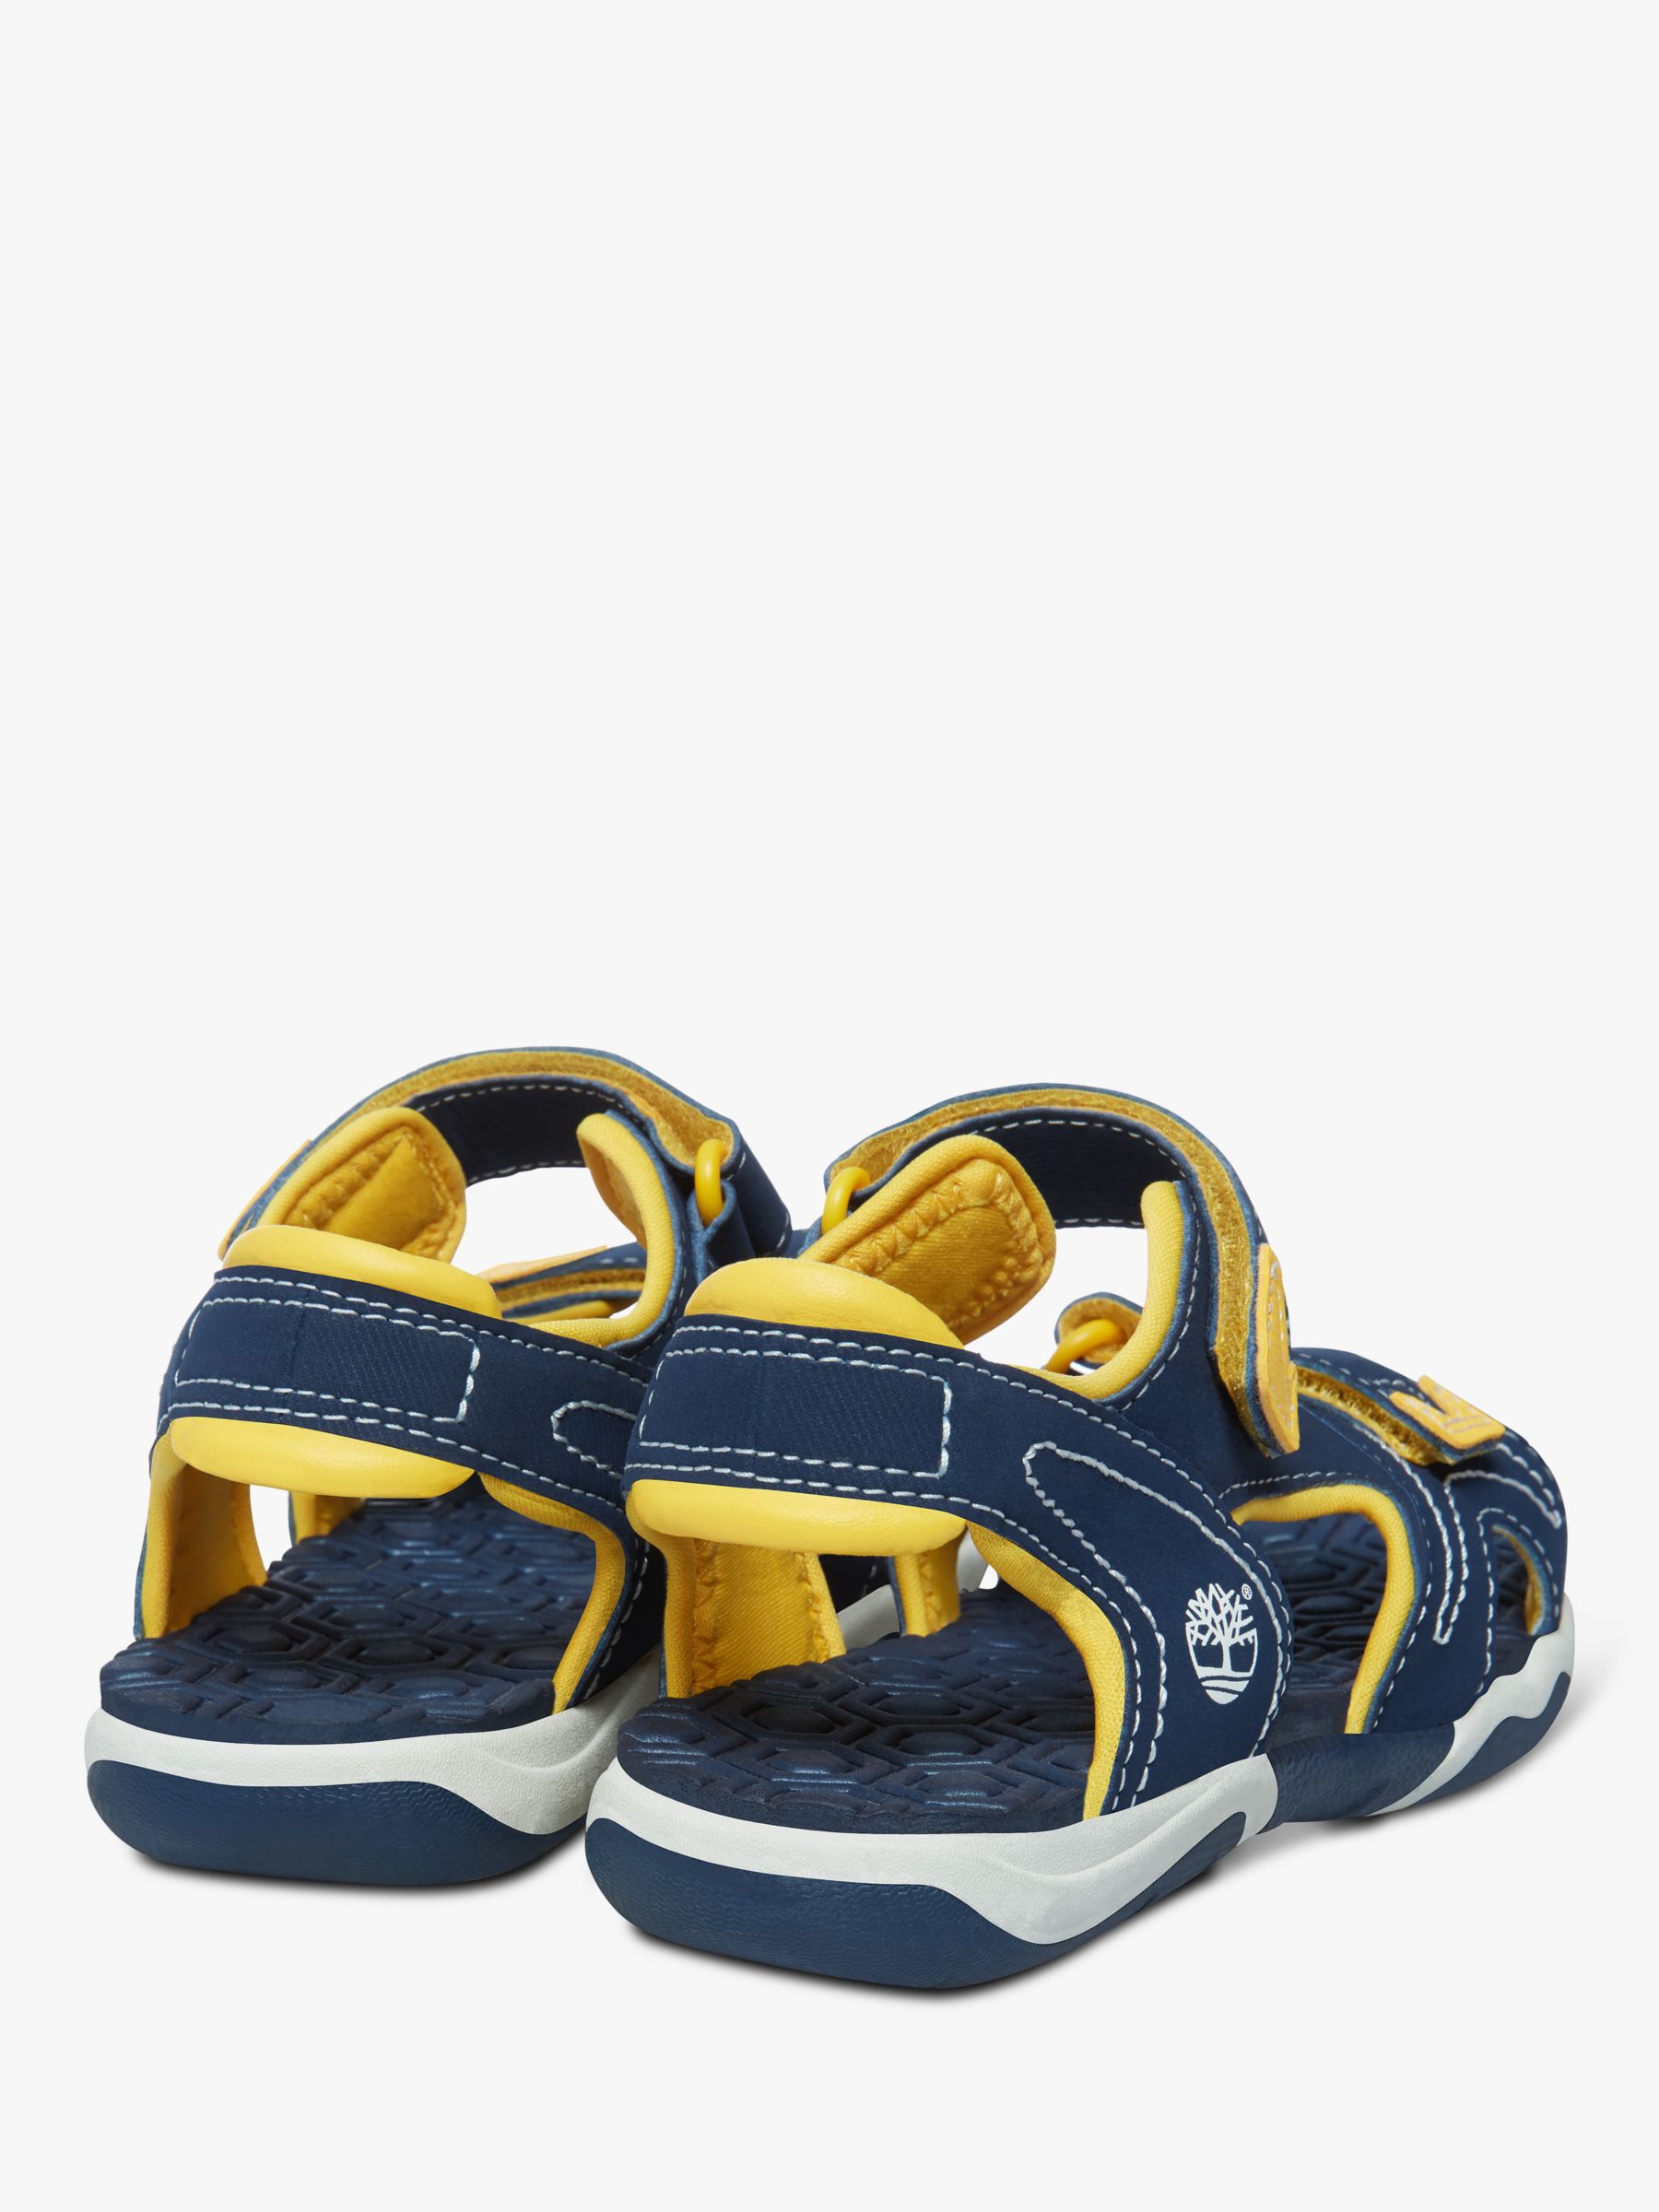 Buy Timberland Kids' Adventure Seeker Riptape Sandals, Navy/Yellow Online at johnlewis.com